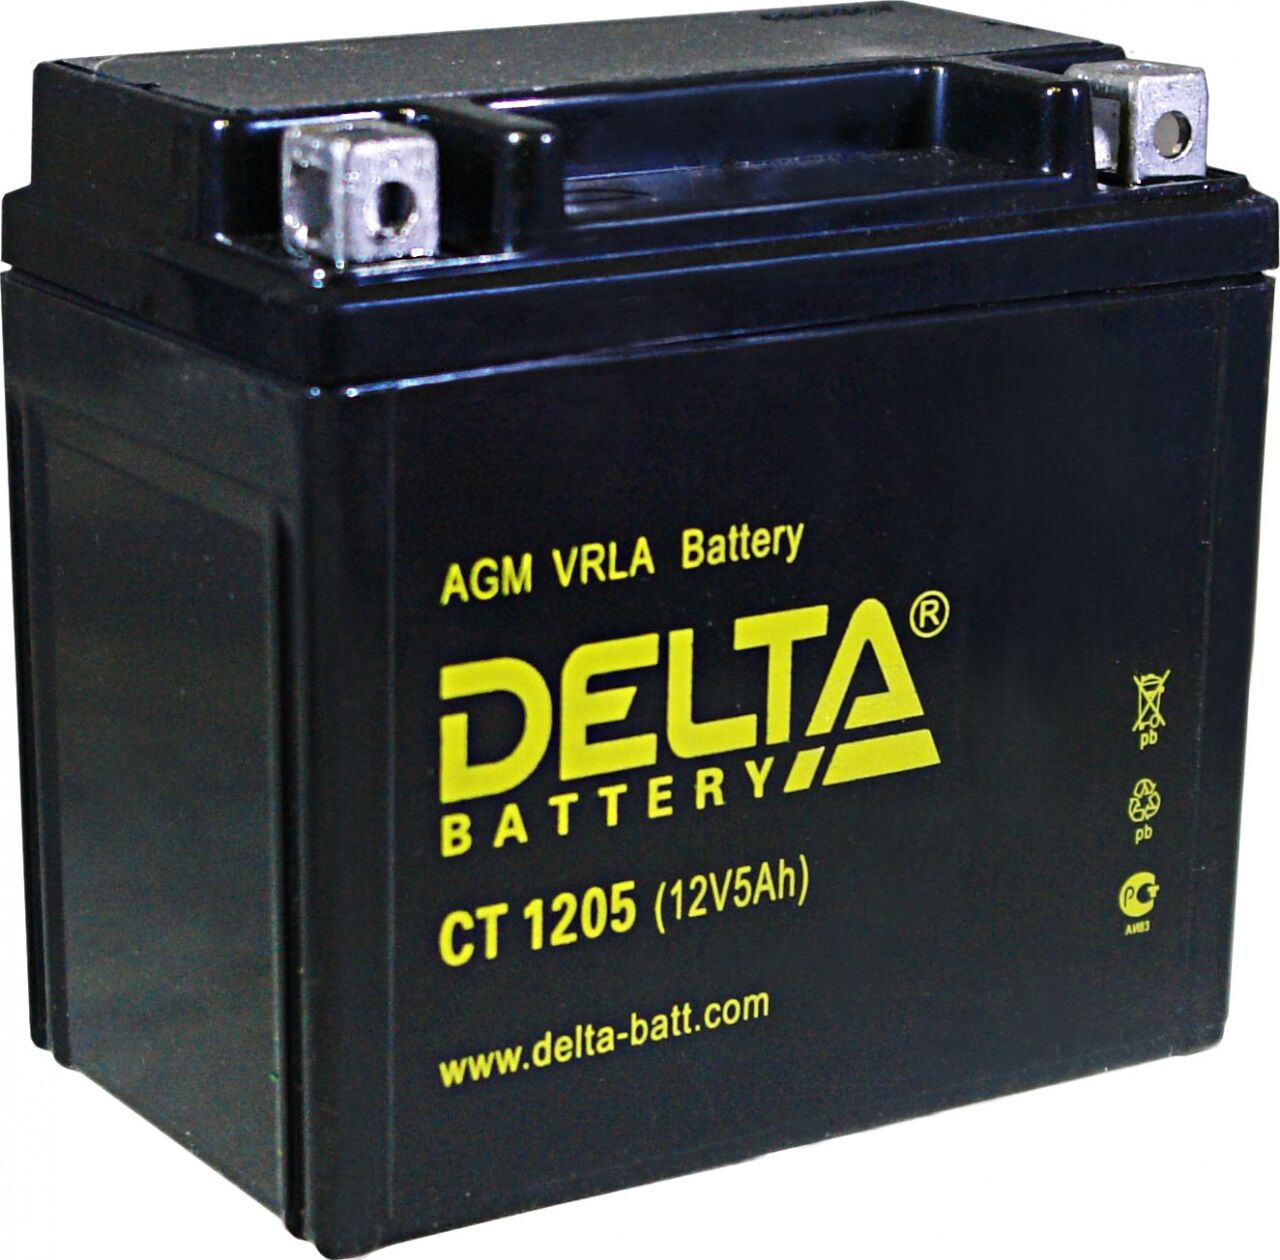 Battery ct. Мото аккумулятор Delta CT 1205.1. Аккумулятор на мотоцикл Дельта 1205. Аккумулятор Delta Battery ct1205. Delta аккумуляторная батарея CT 1205.